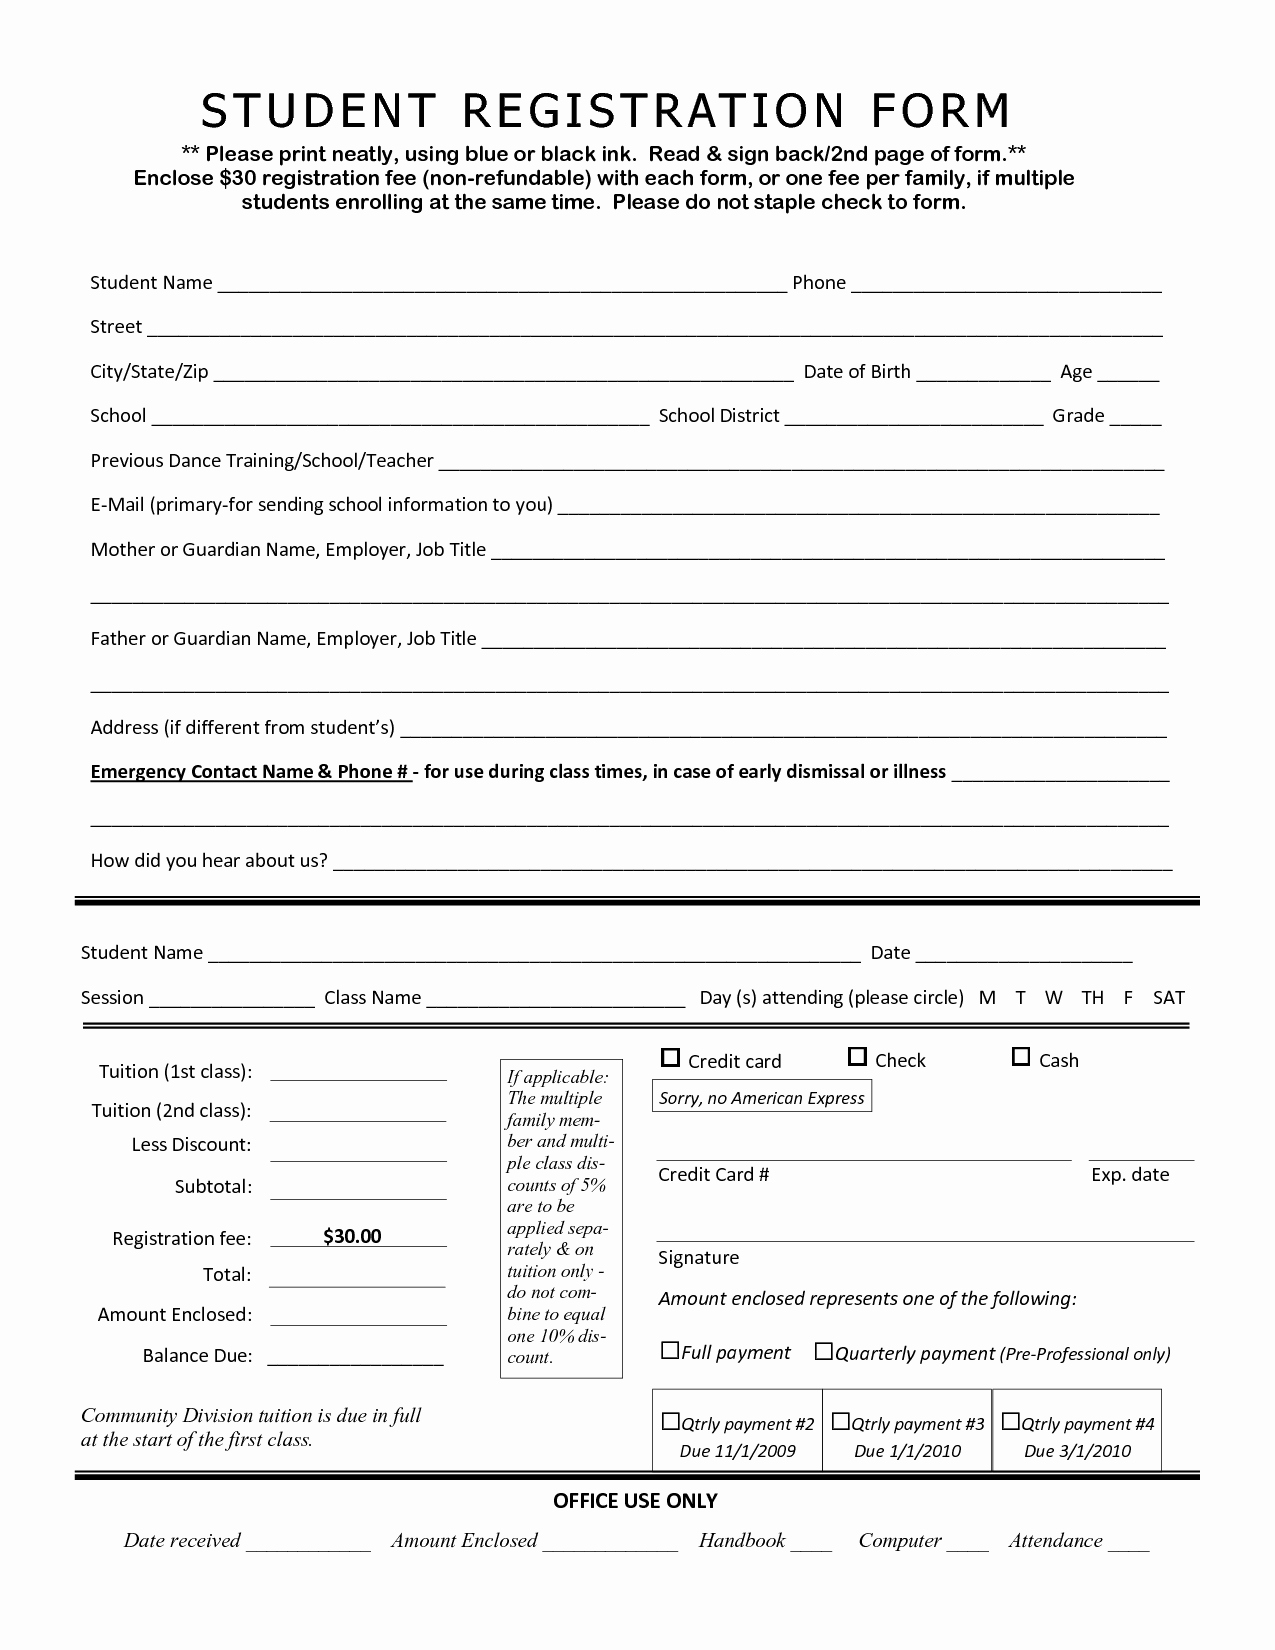 Free Registration form Template Beautiful Student Application form Template Portablegasgrillweber